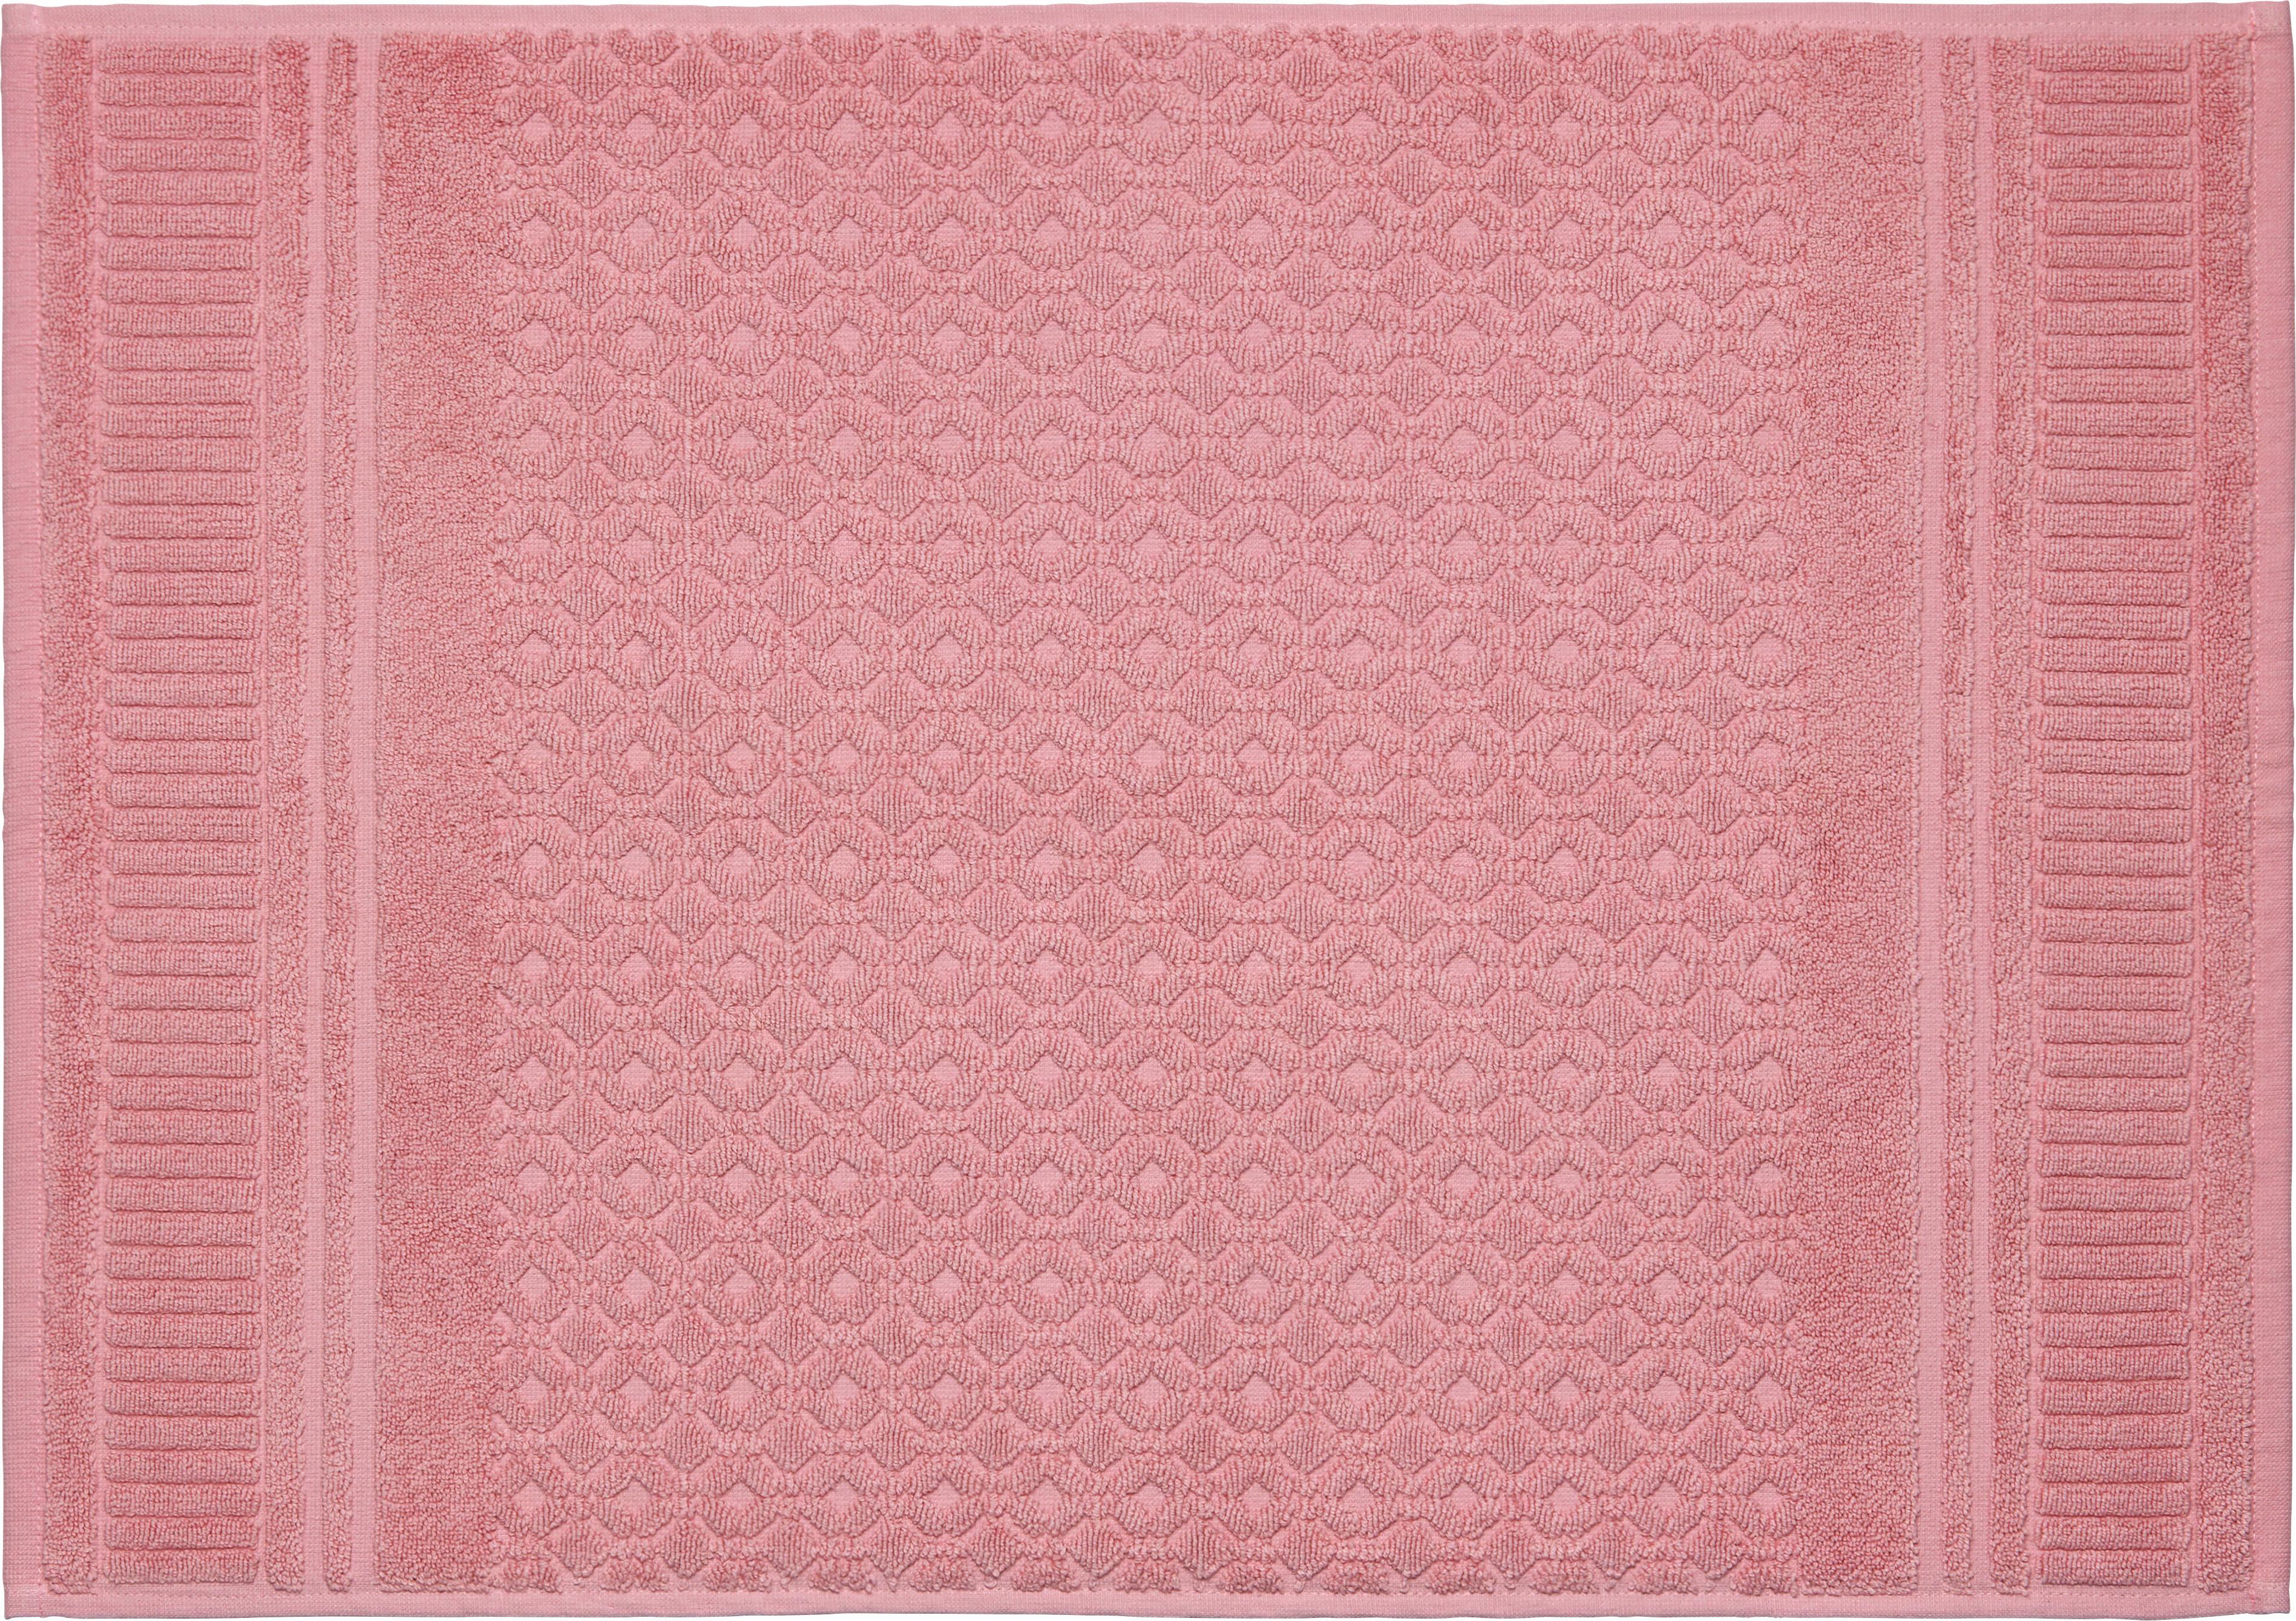 Badematte Carina Rosa 50x70cm - Rosa, Romantik / Landhaus, Textil (50/70cm) - Modern Living